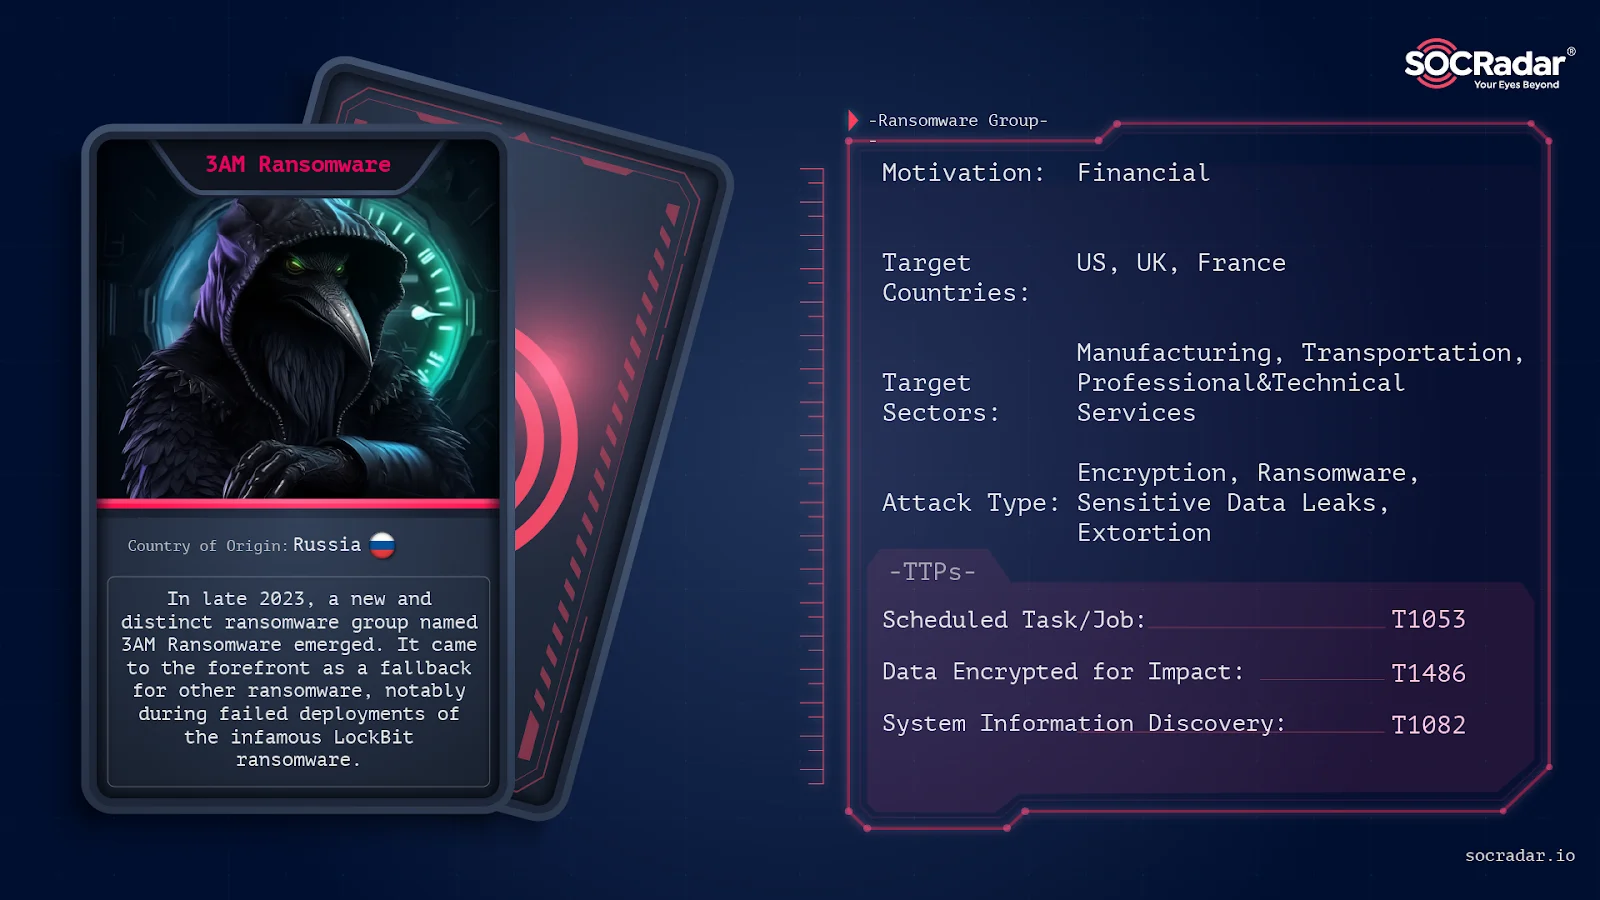 SOCRadar® Cyber Intelligence Inc. | Dark Web Profile: 3AM Ransomware